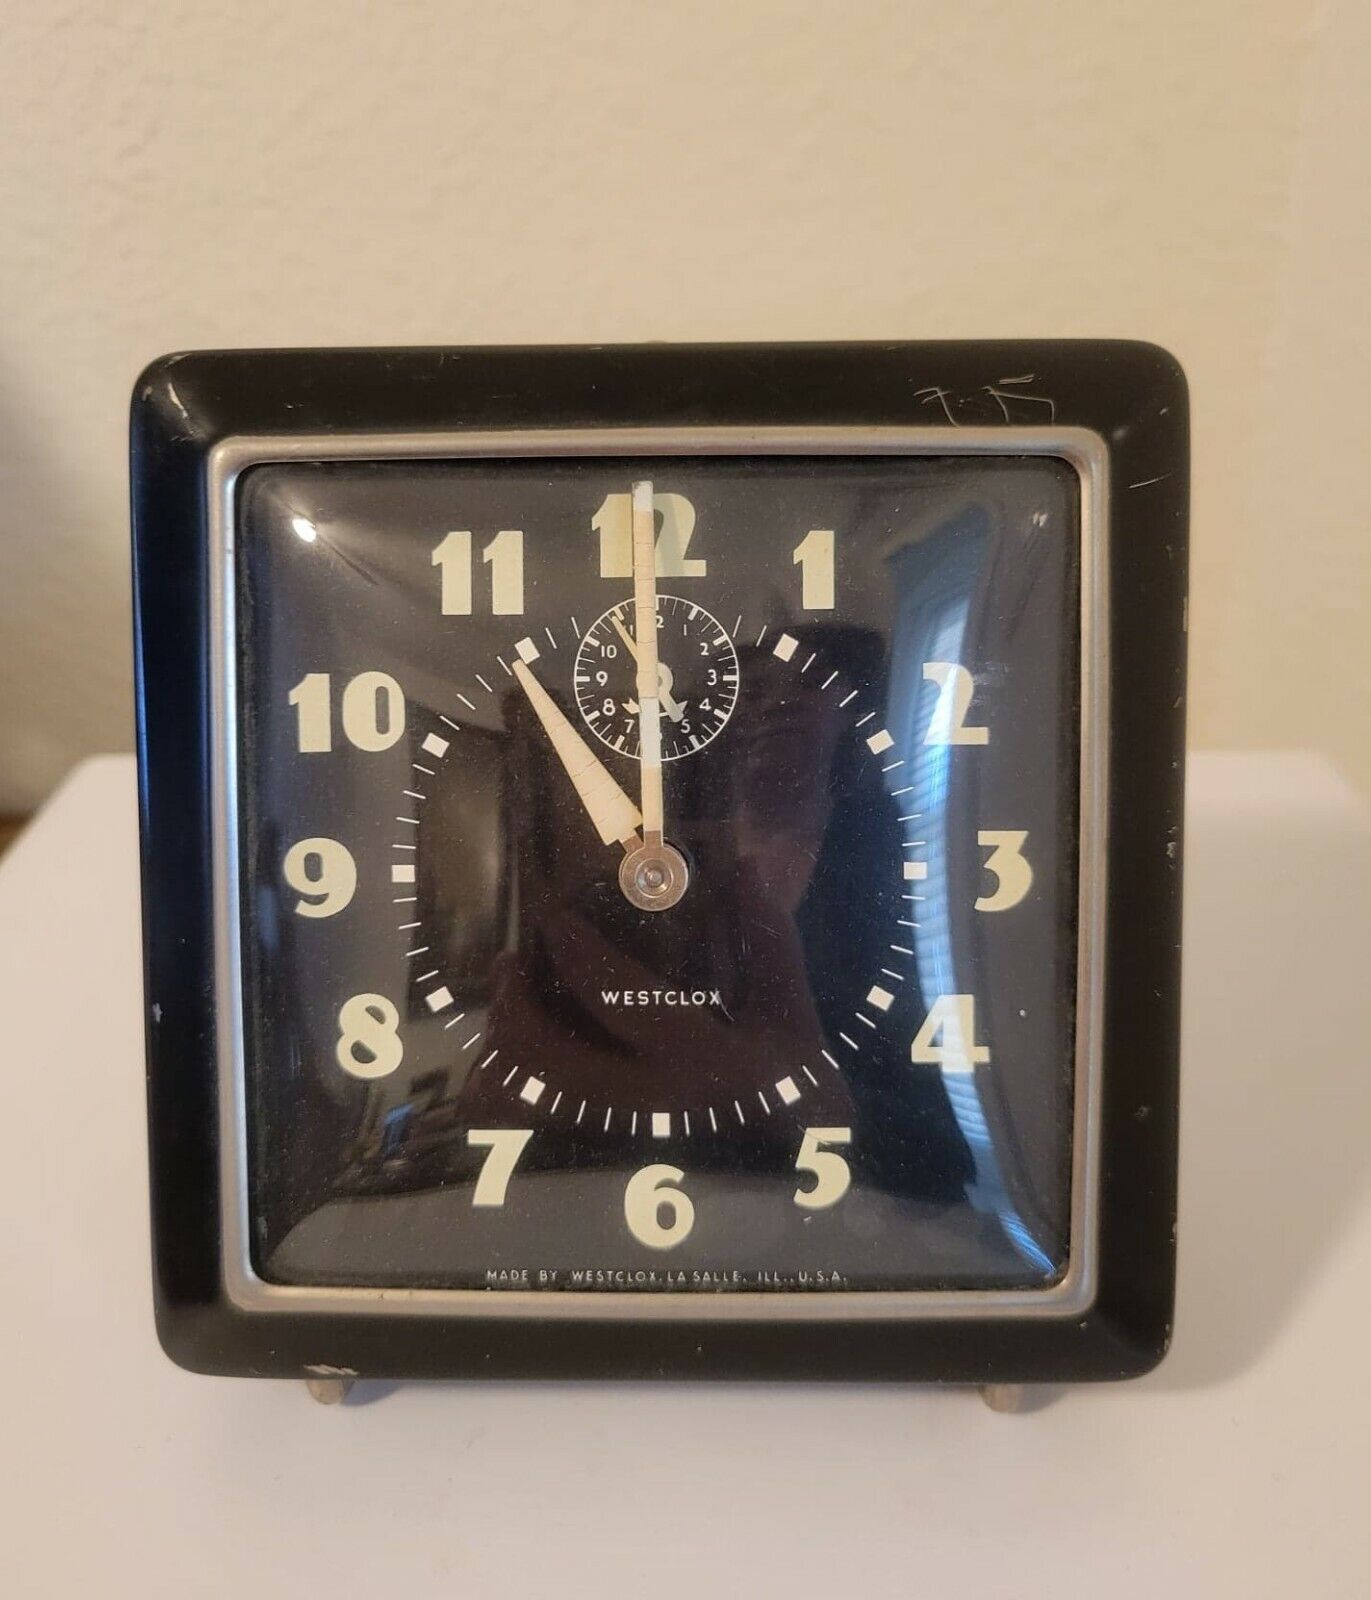 Antique Westclox Alarm Clock La Salle Illinois USA 1930's  See Description below